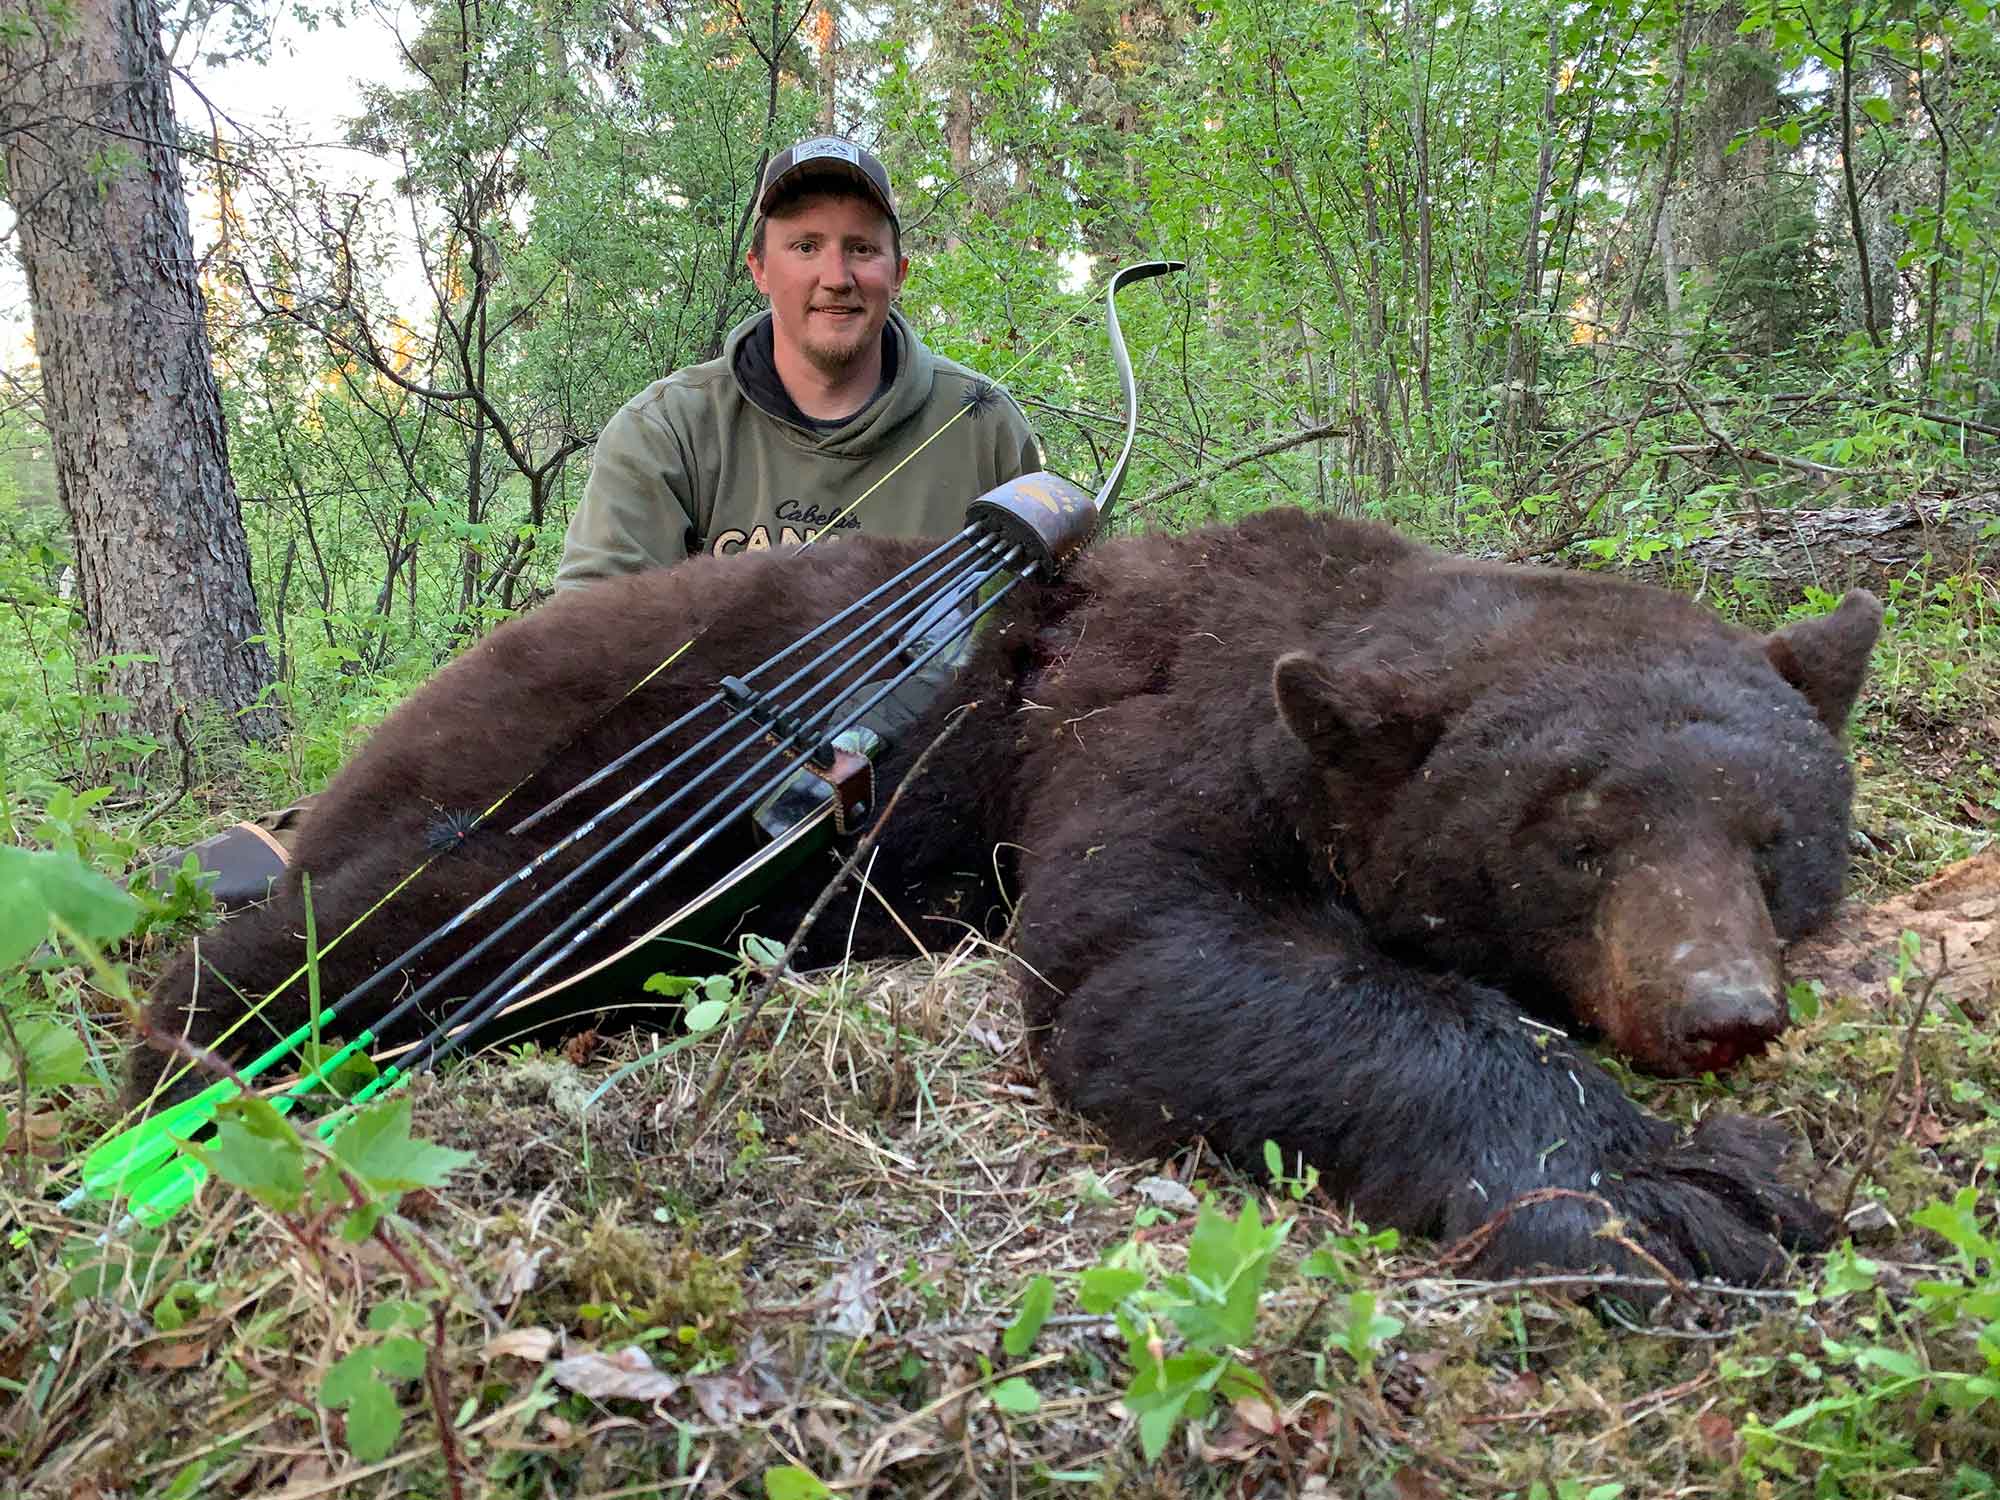 Hunter beside dead bear and bow